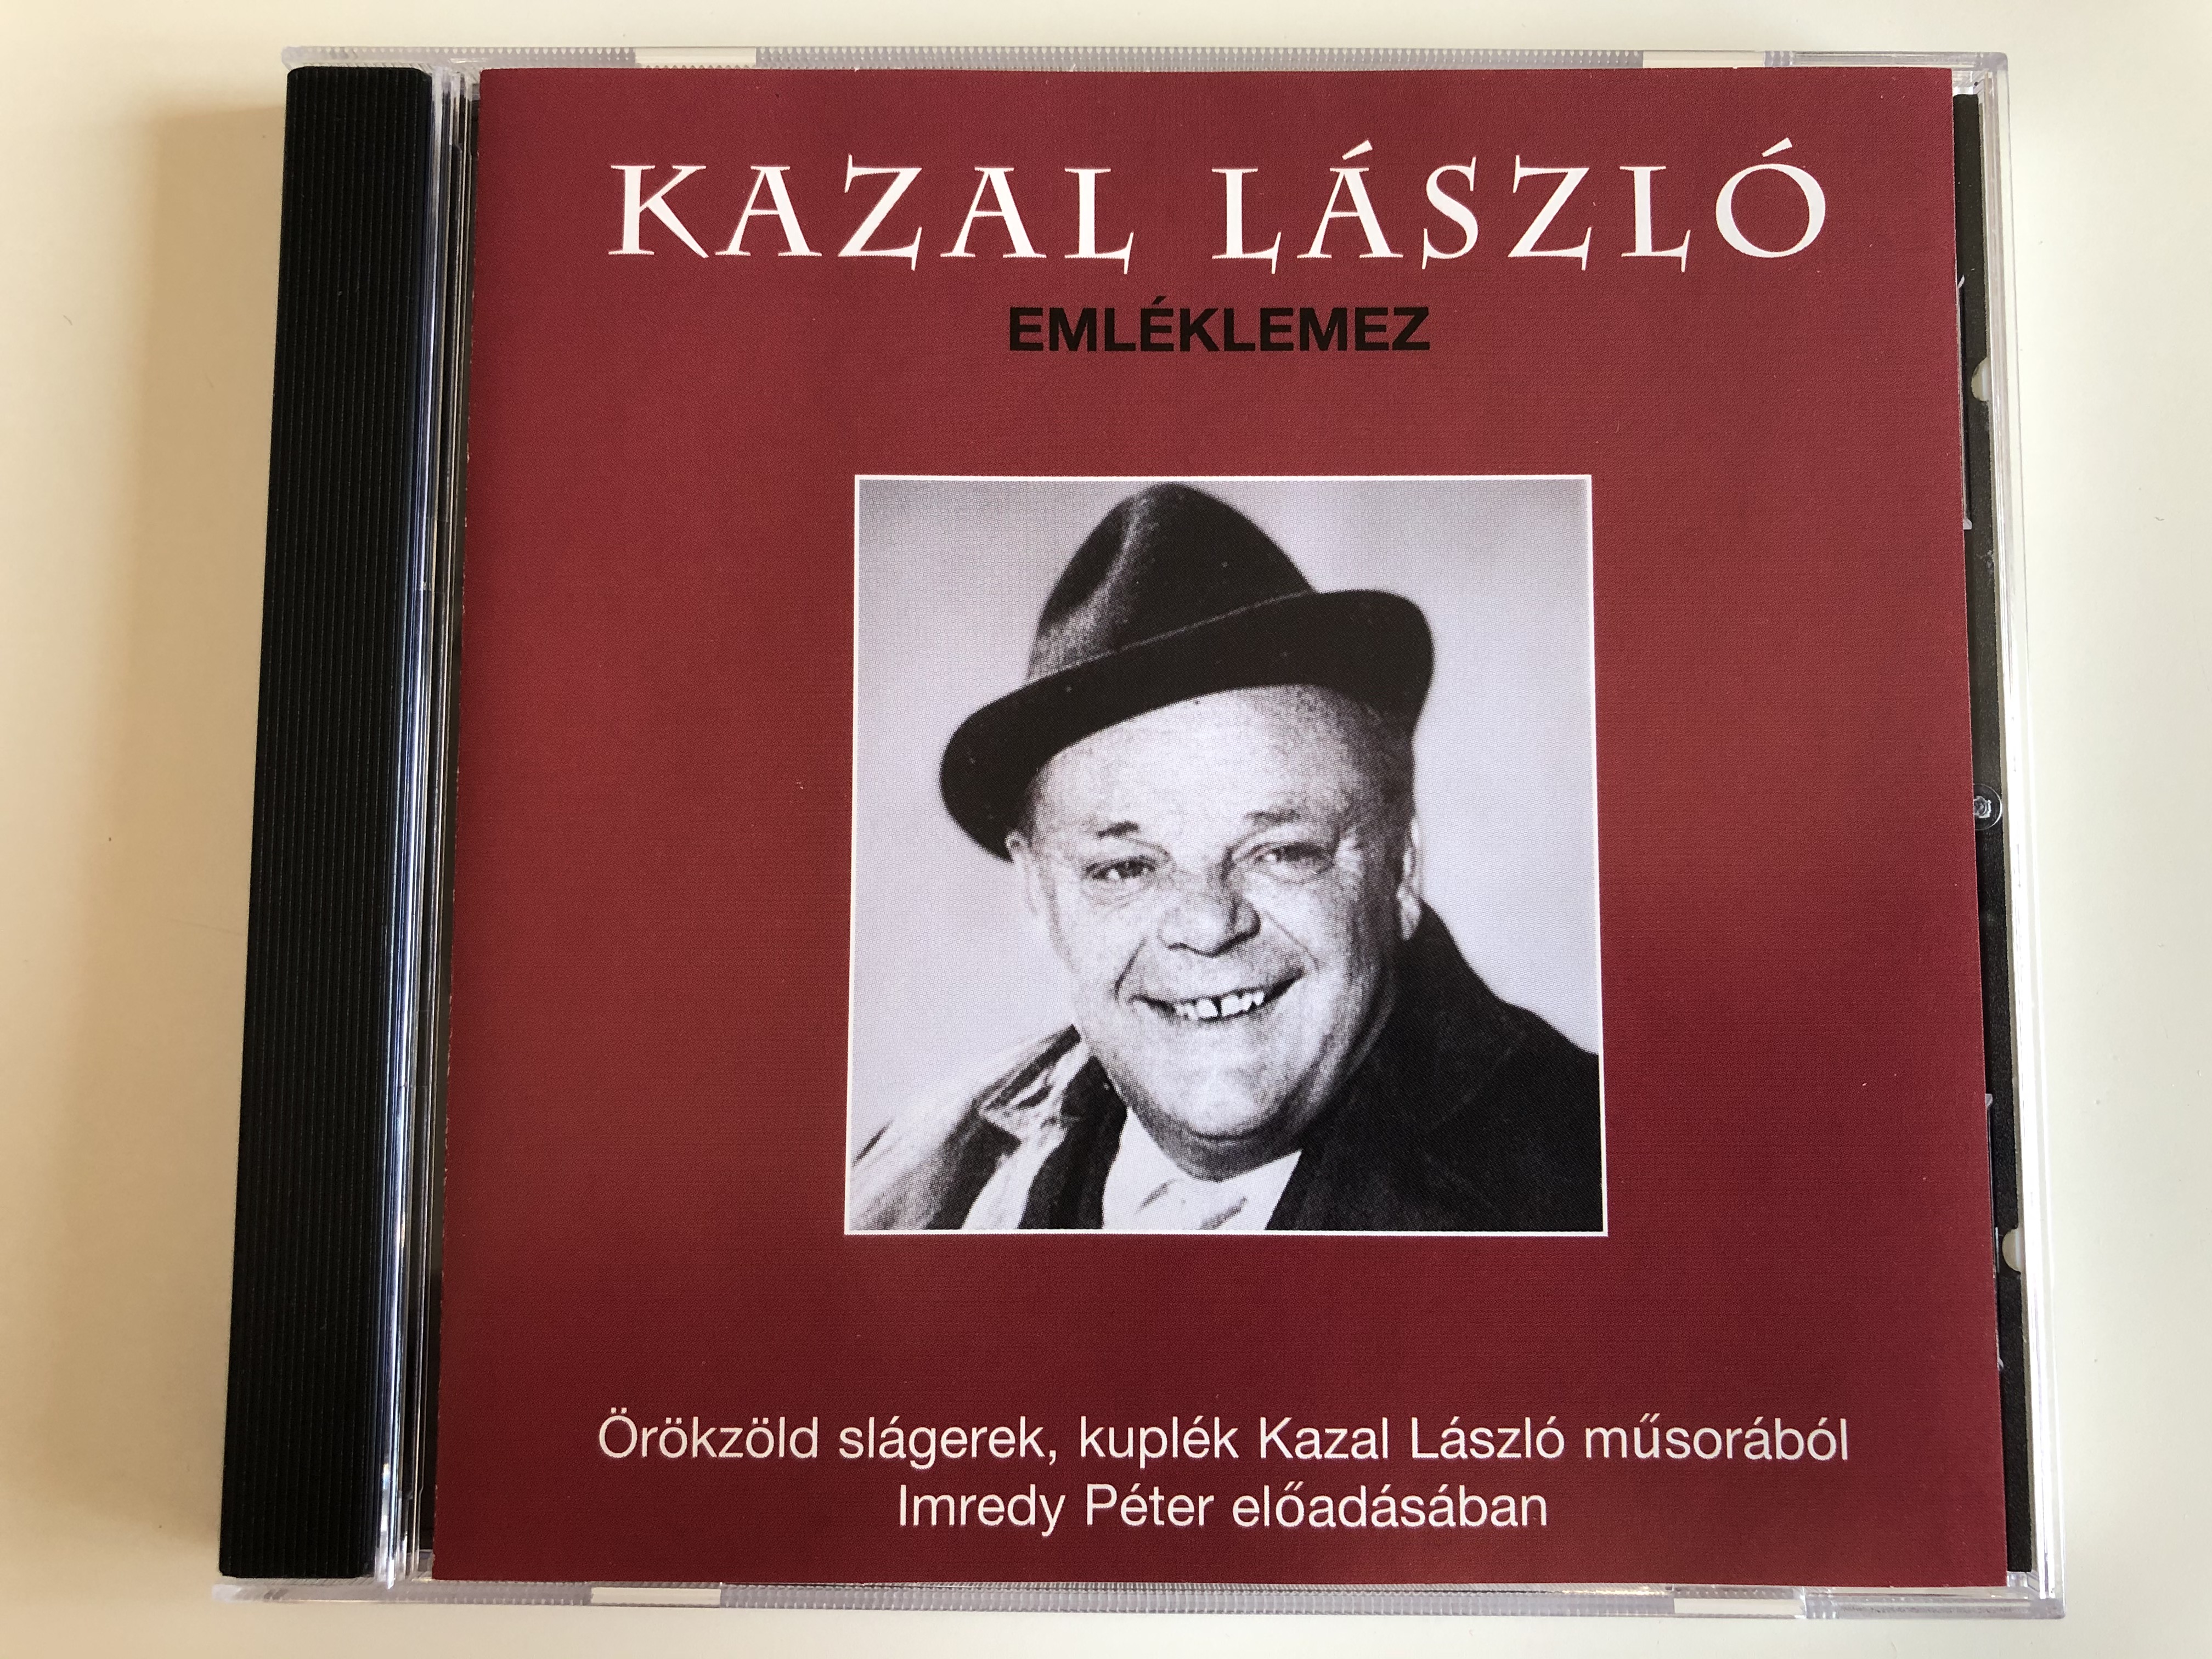 kazal-l-szl-eml-klemez-orokzold-slagerek-kuplek-kazal-laszlo-musorabol-imredy-p-ter-eloadasaban-ff-film-music-audio-cd-2008-b687892-1-.jpg